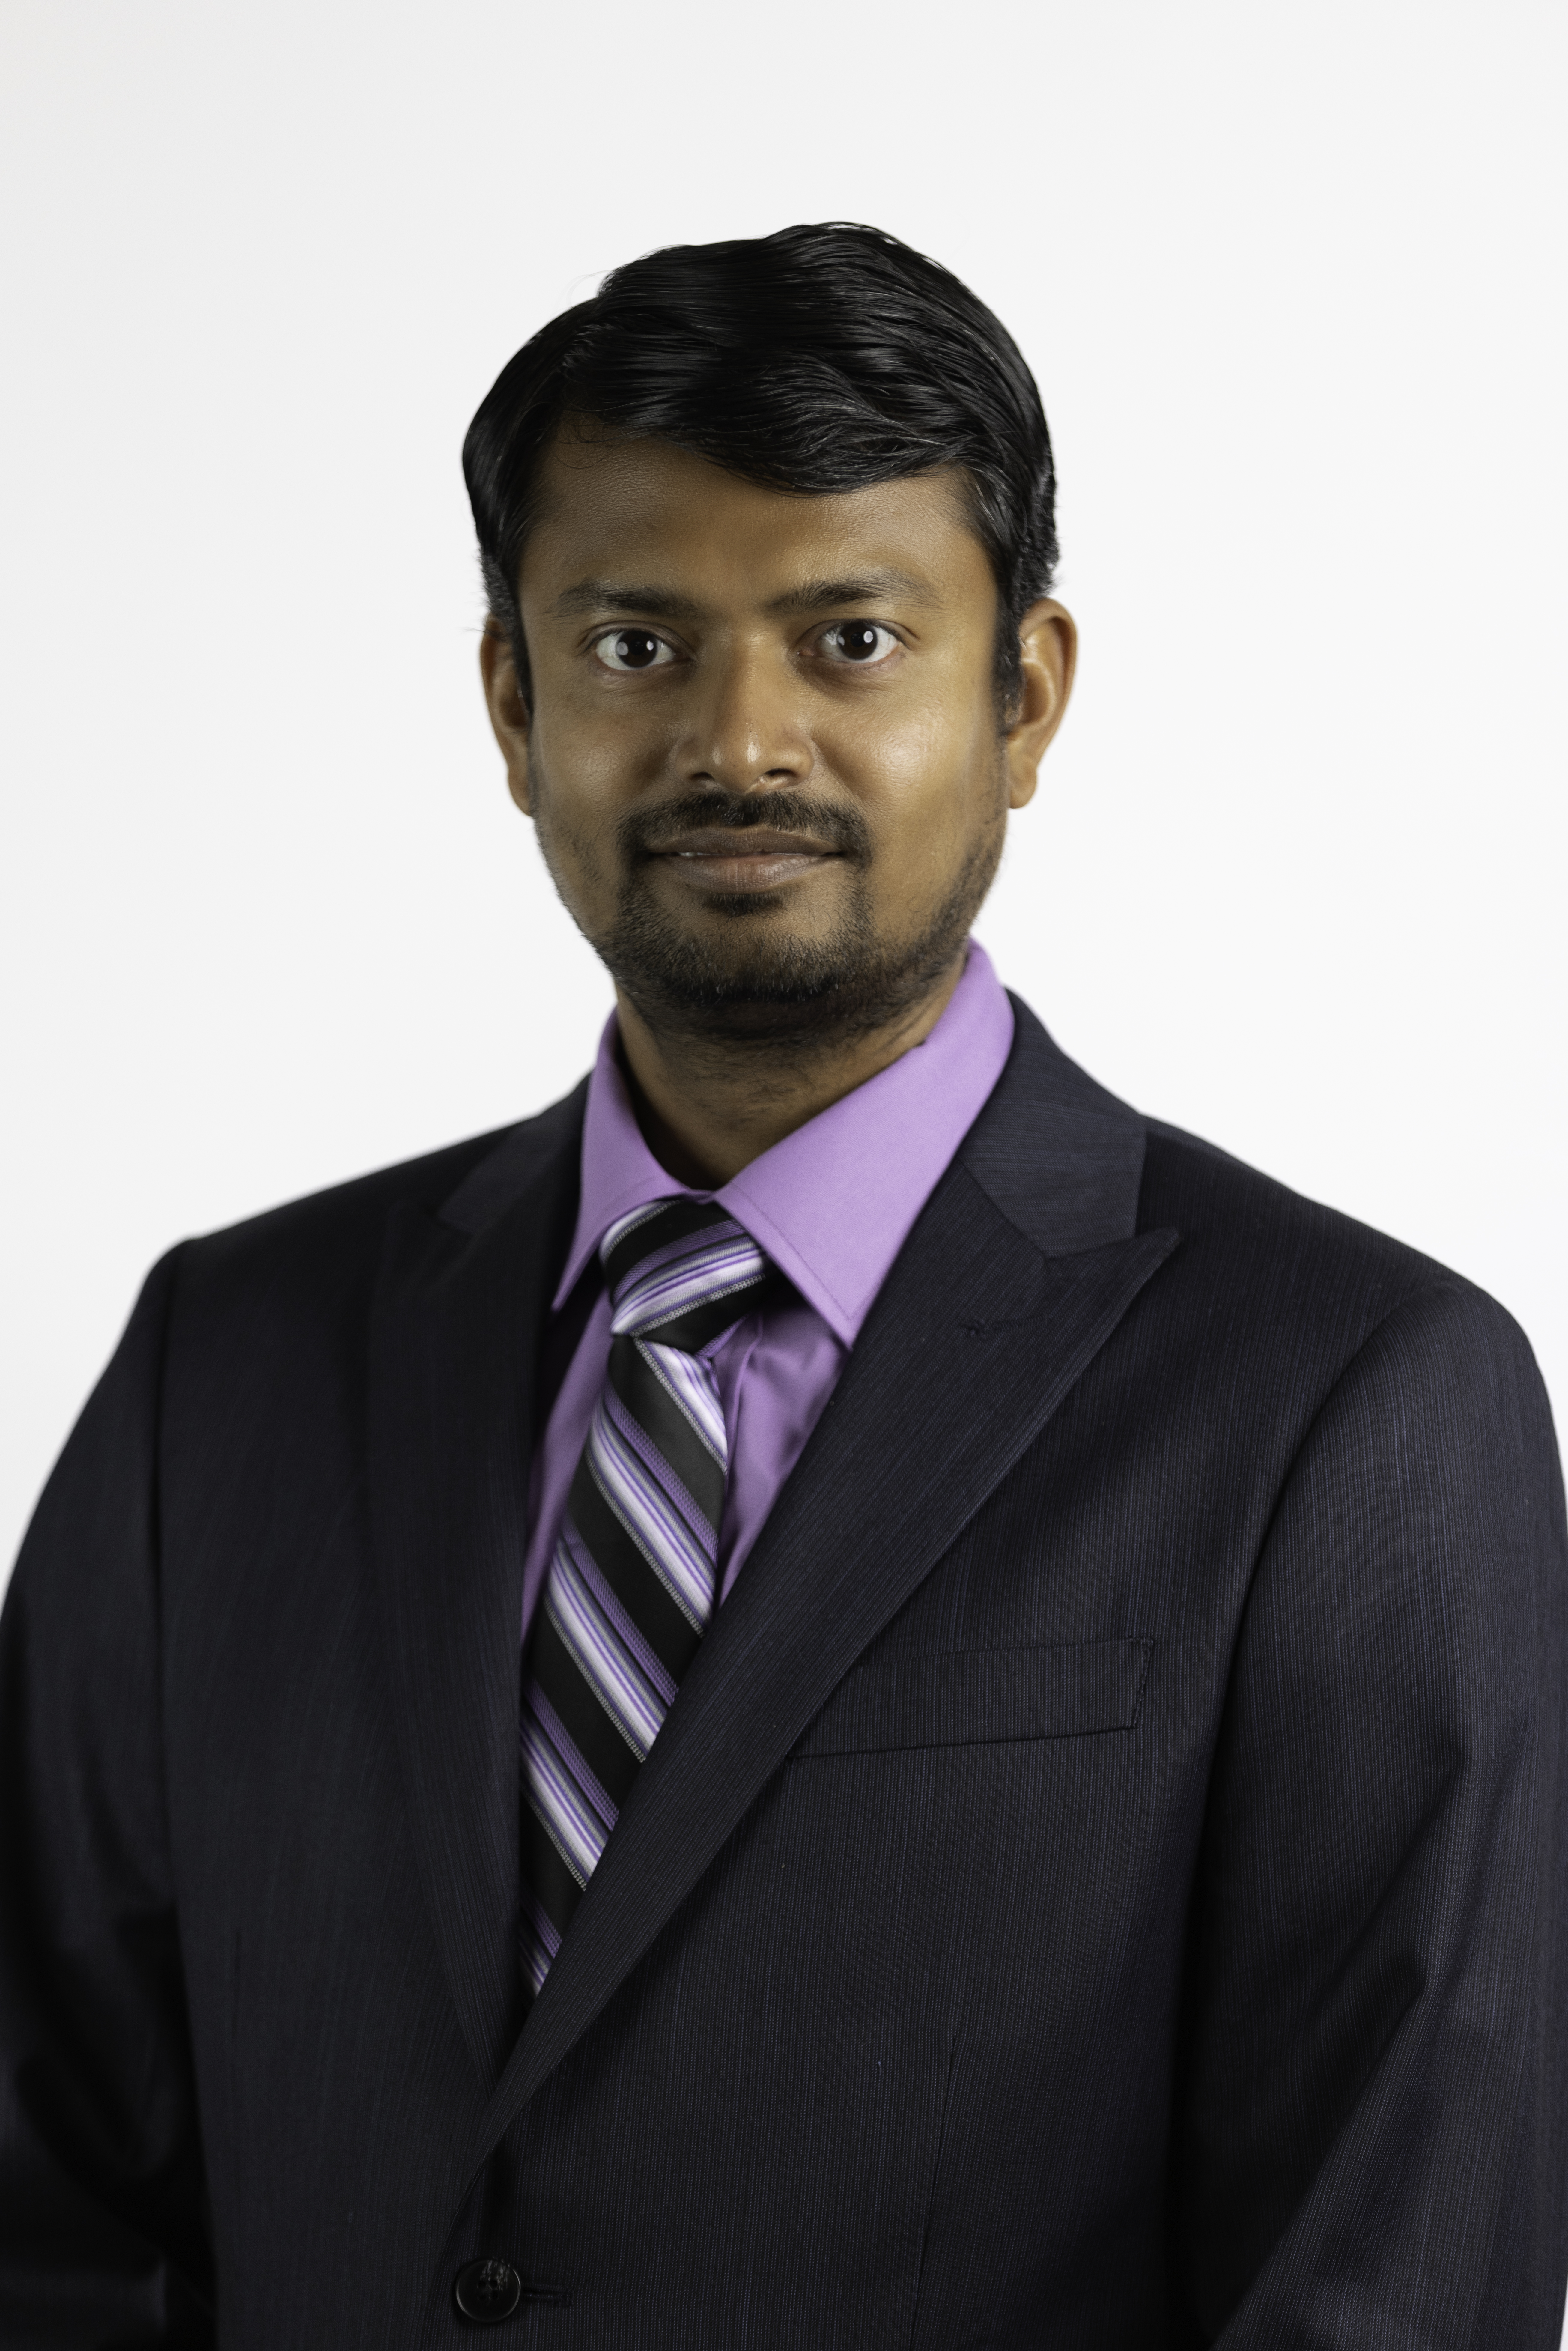 Balamurugan Jeyakumar - Senior Technical Architect at iLink Digital, Inc